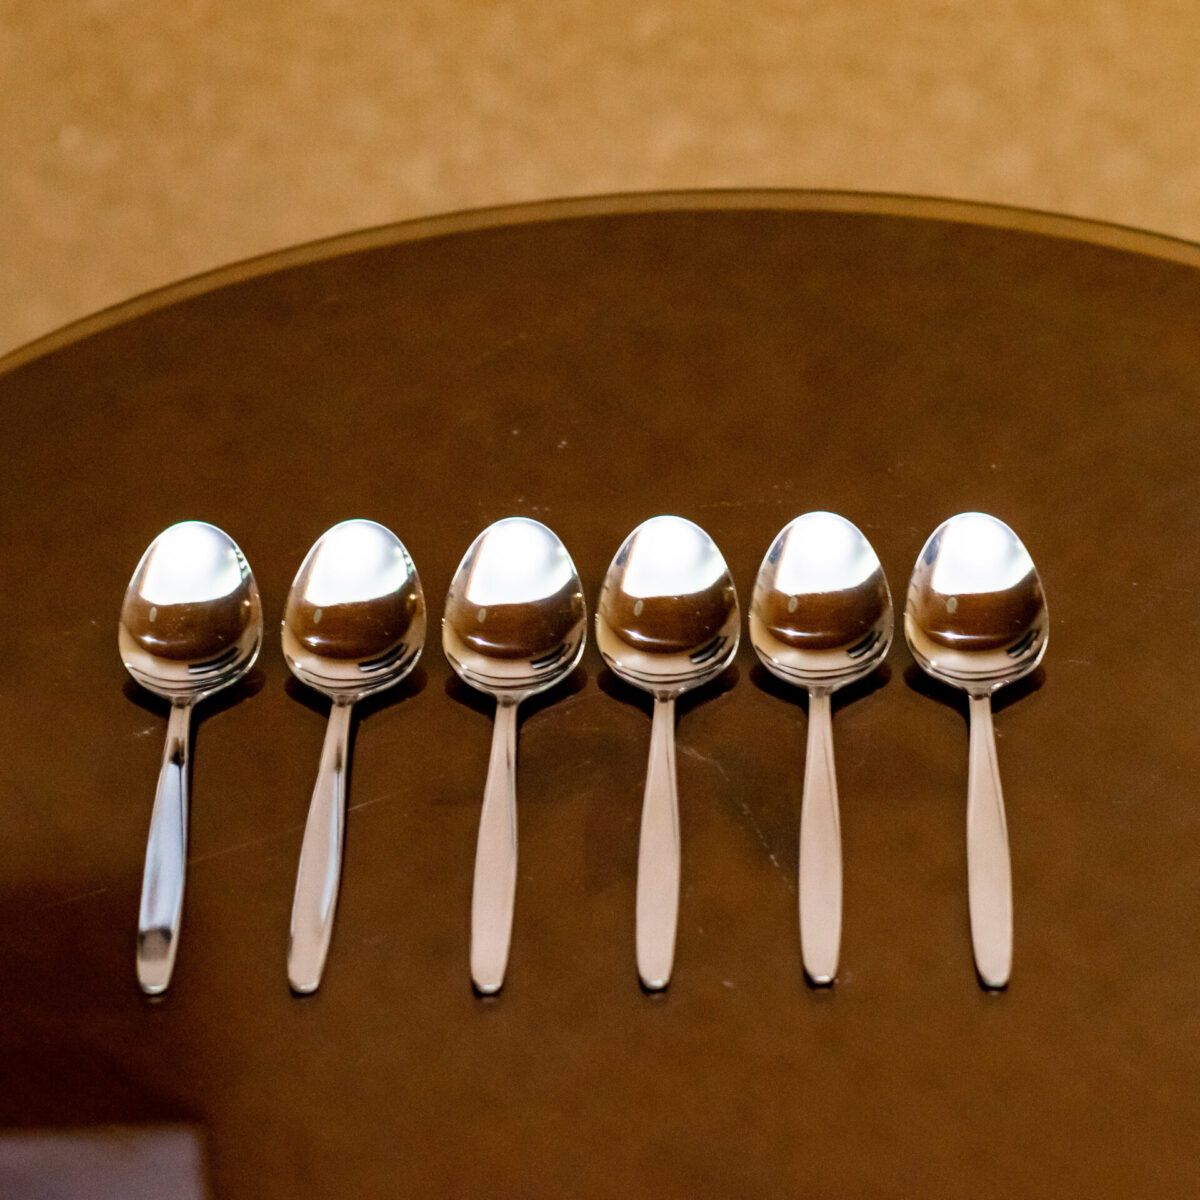 mono-table-spoons-6-pc-set-832918